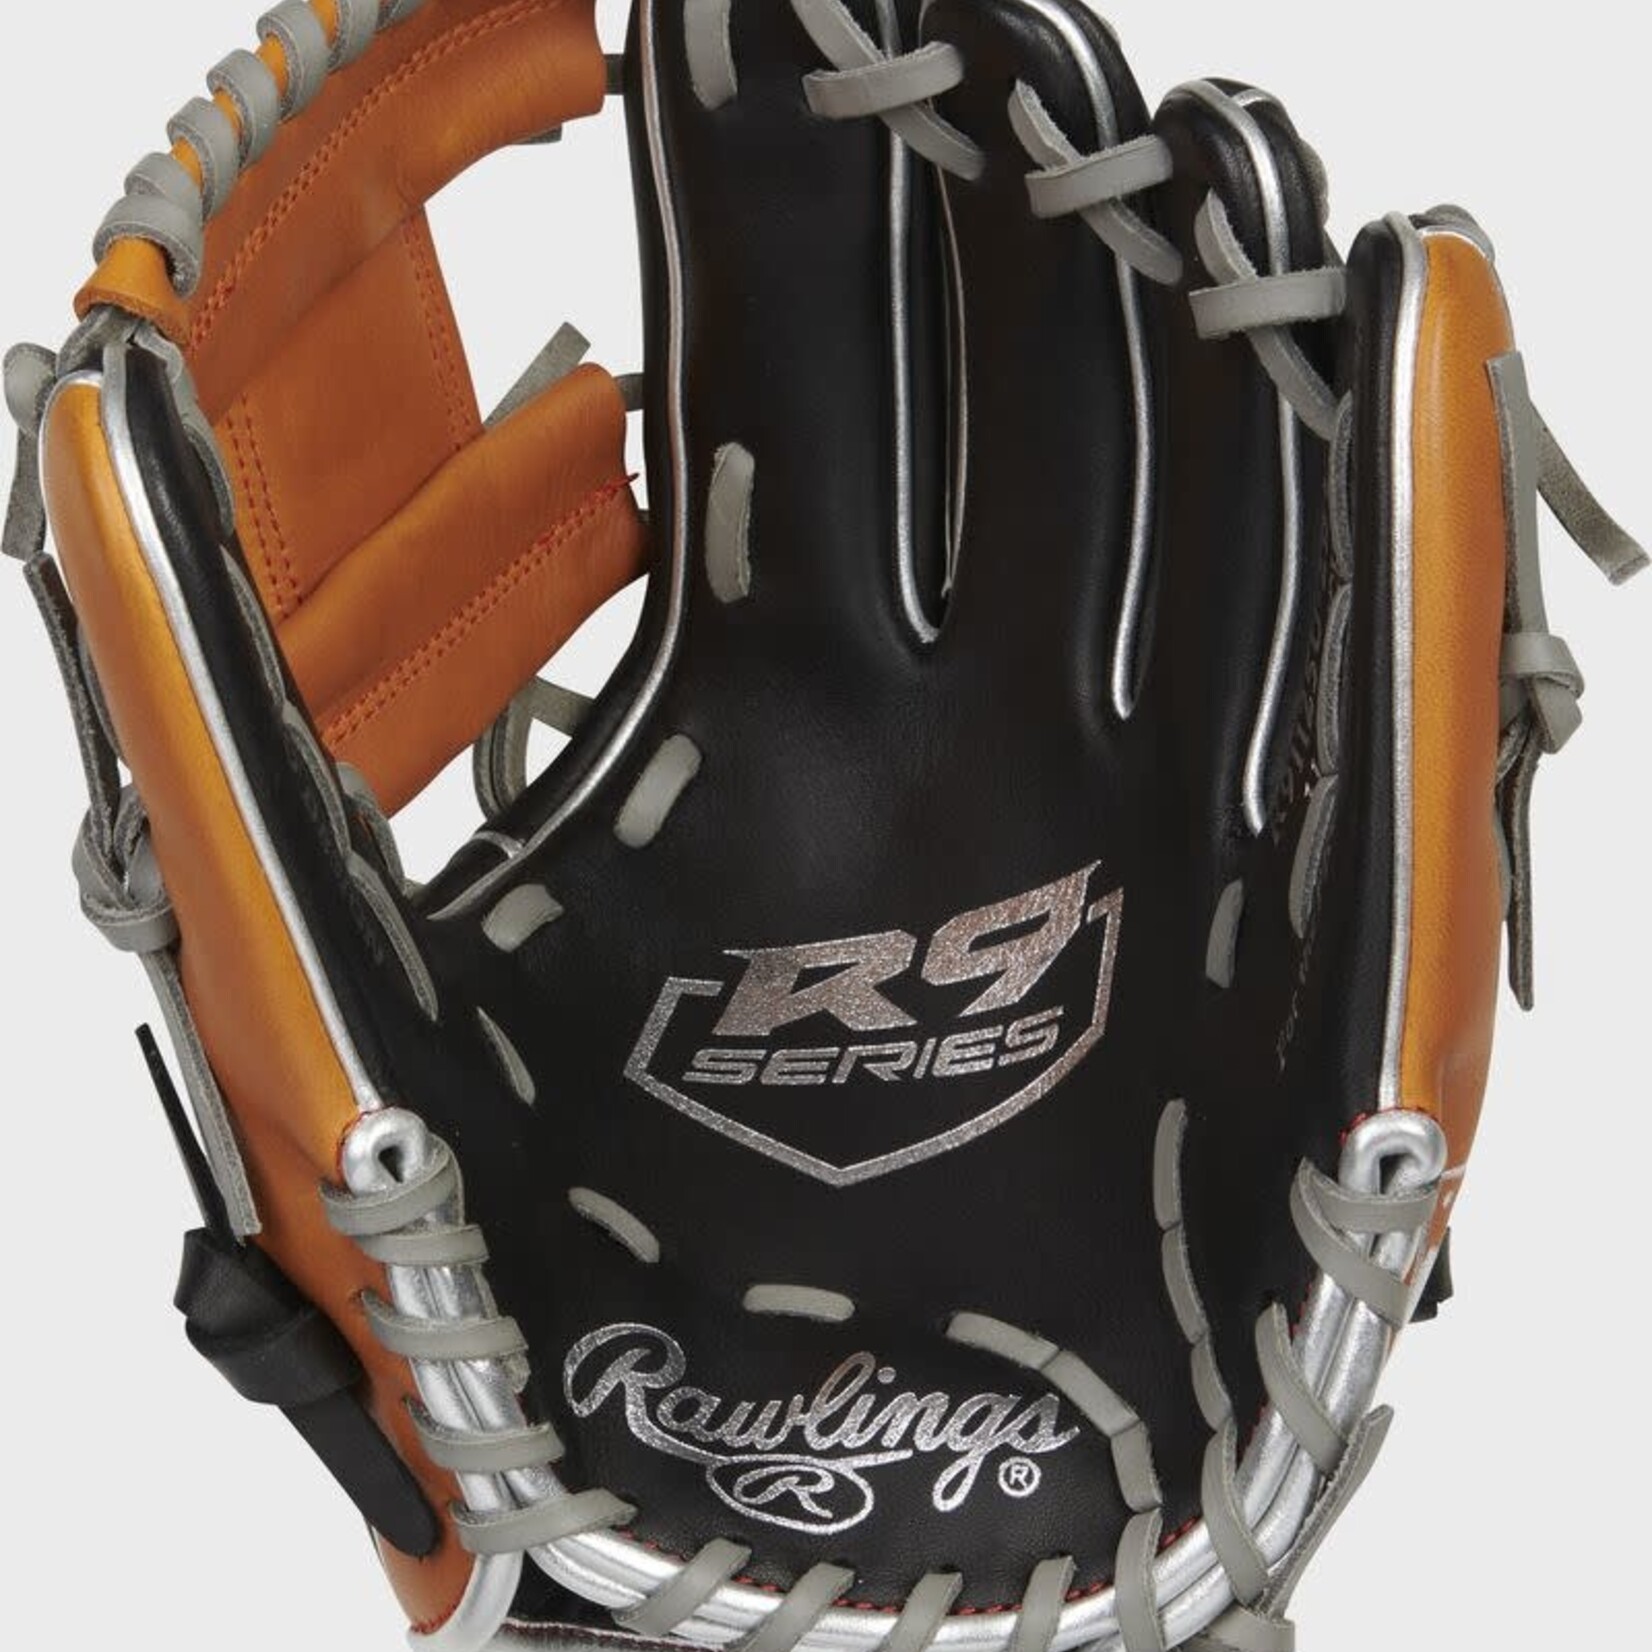 Rawlings Rawlings Baseball Glove, R9 Contour Series, R91125U-2BT, 11.25”, Blk/Tan, Reg, Youth